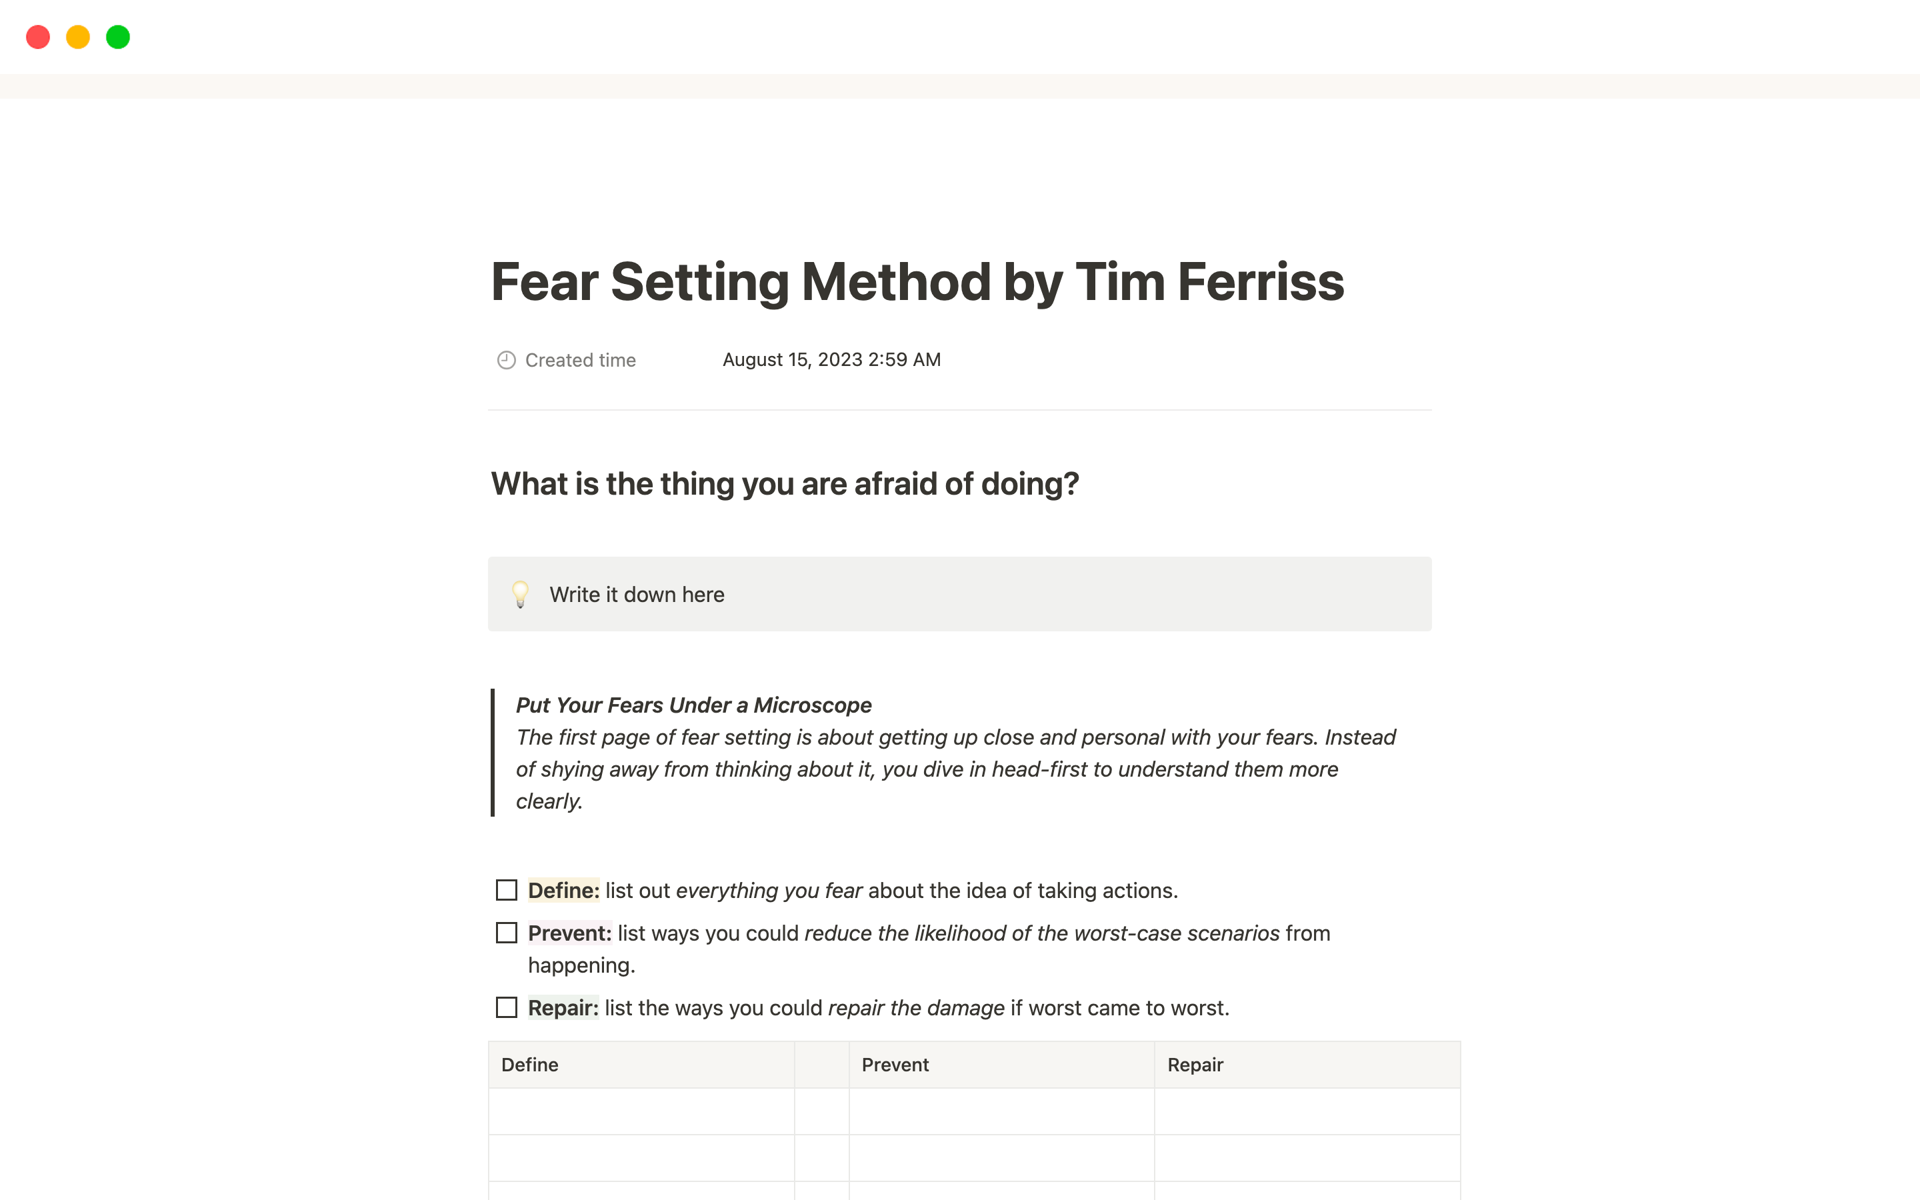 Aperçu du modèle de Fear Setting Method by Tim Ferriss